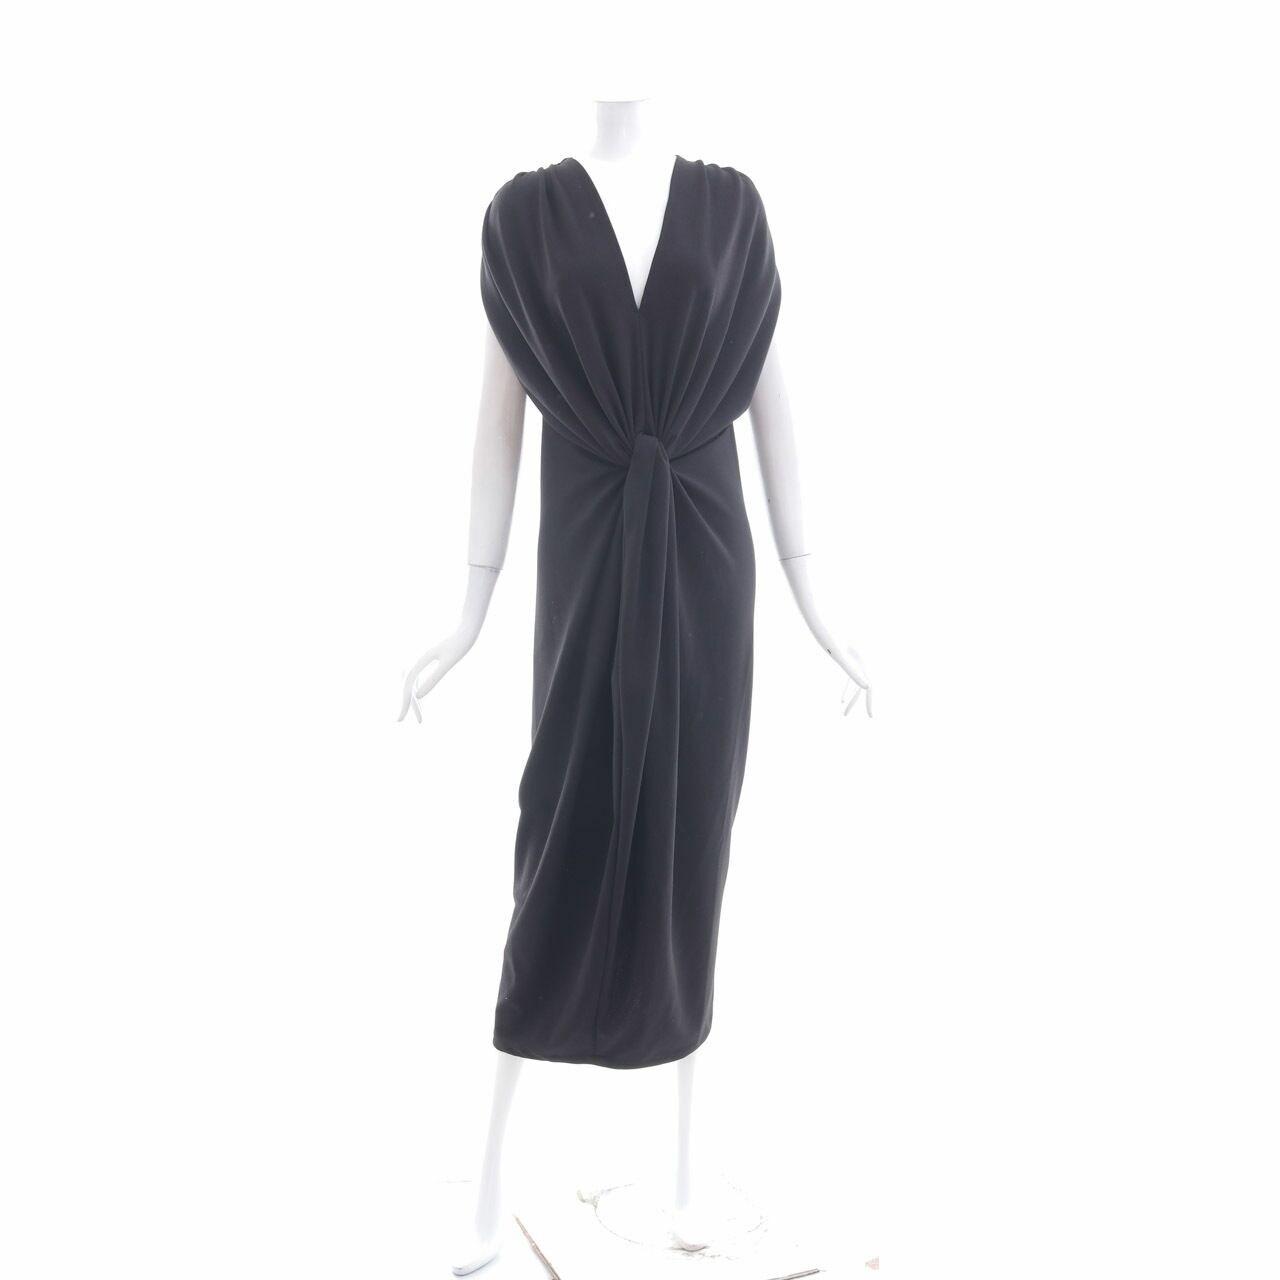 AVGAL Black Midi Dress